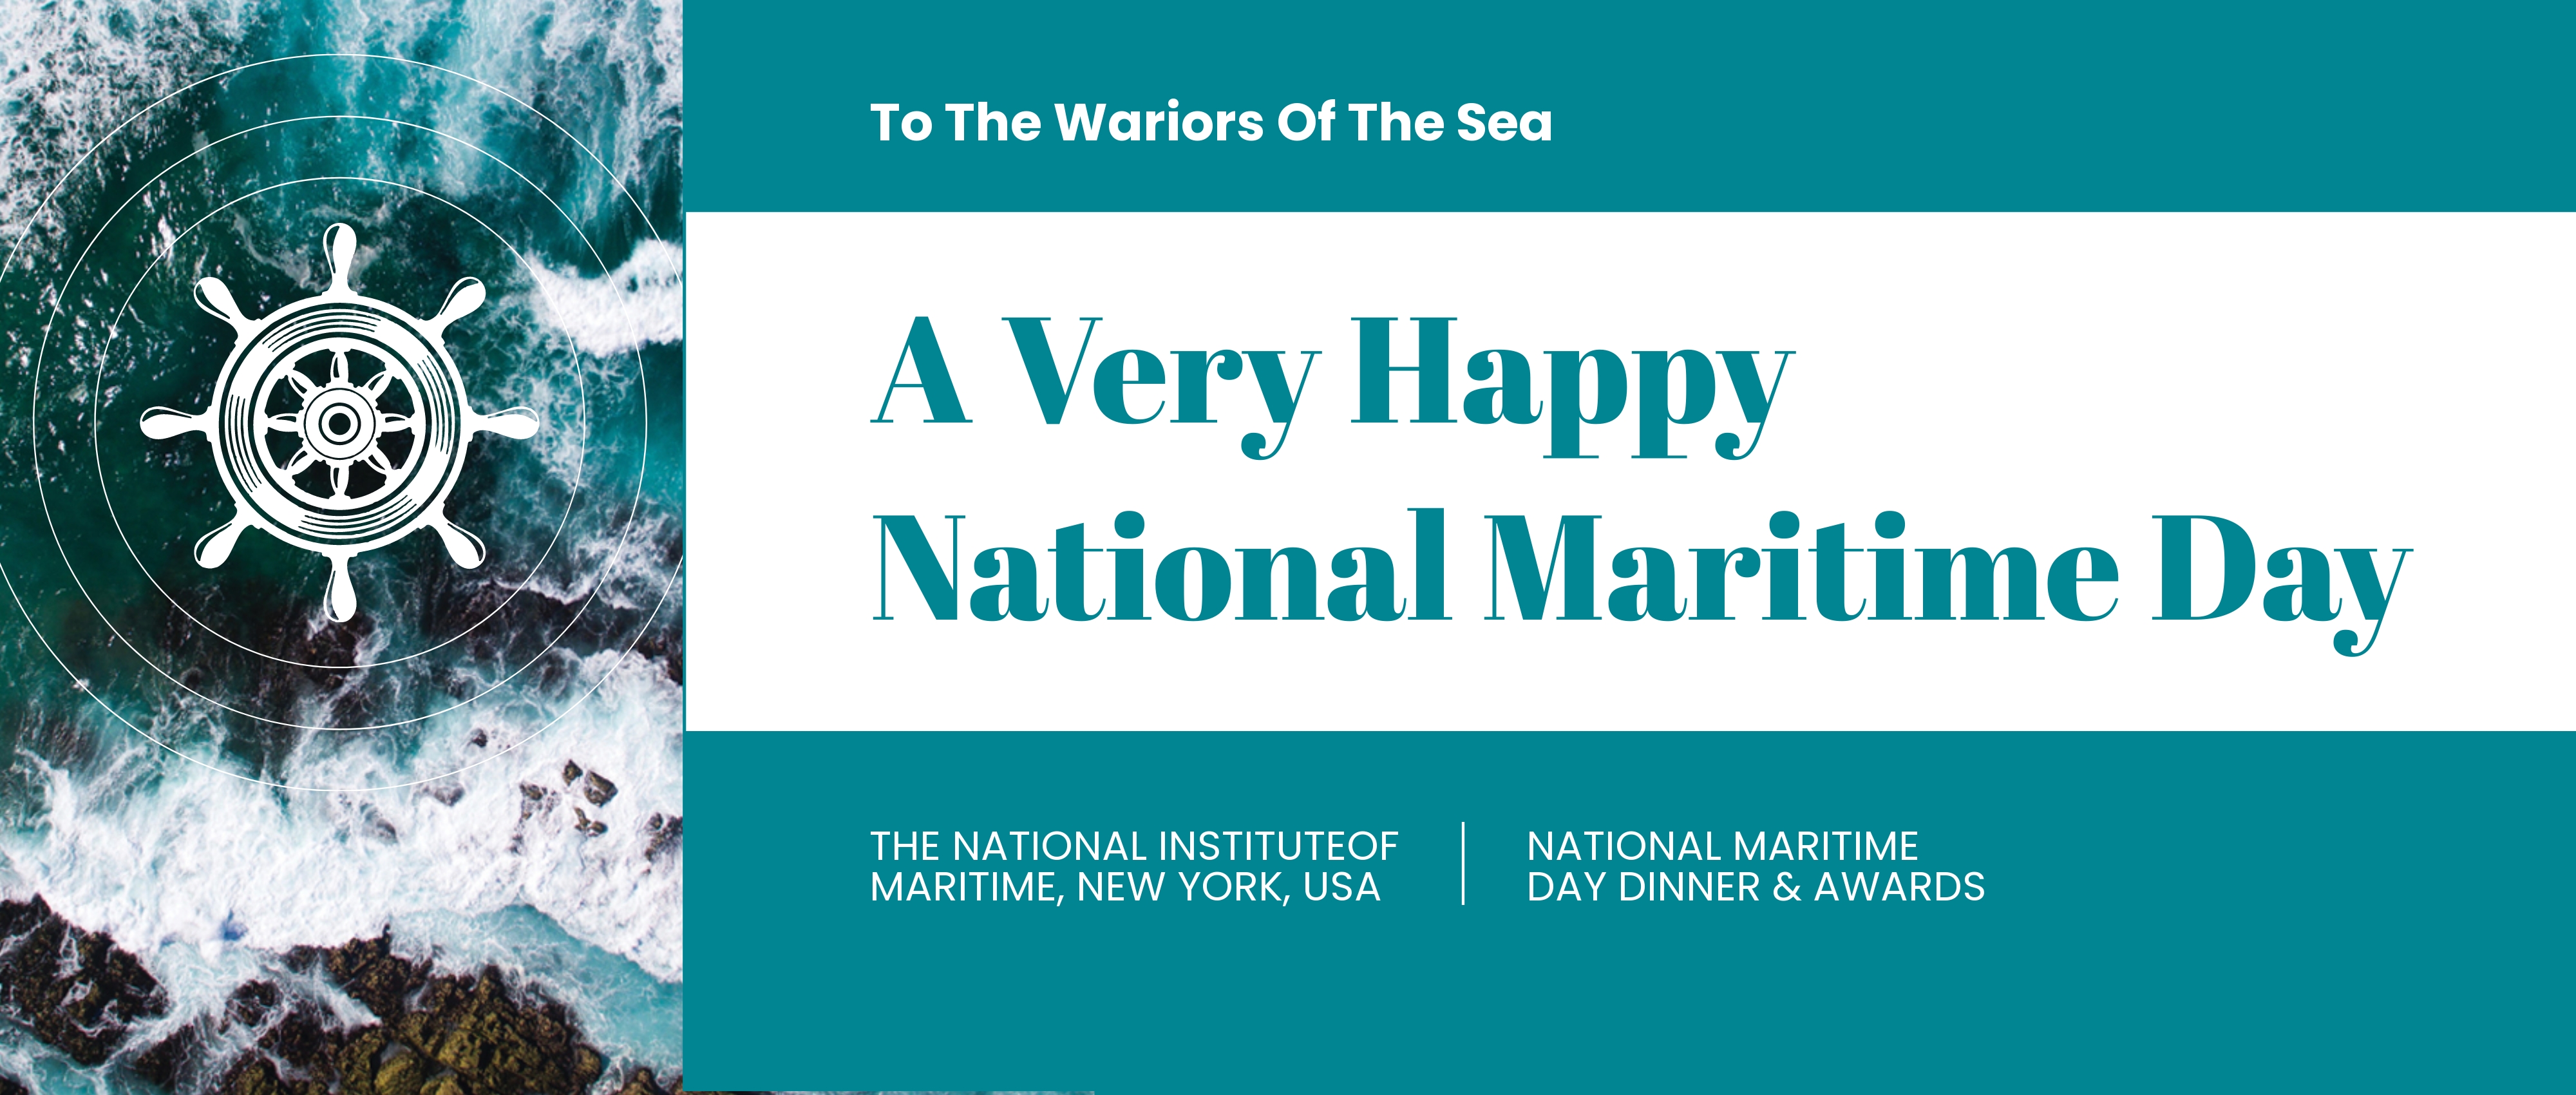 National Maritime Day LinkedIn Profile Banner Template.jpe